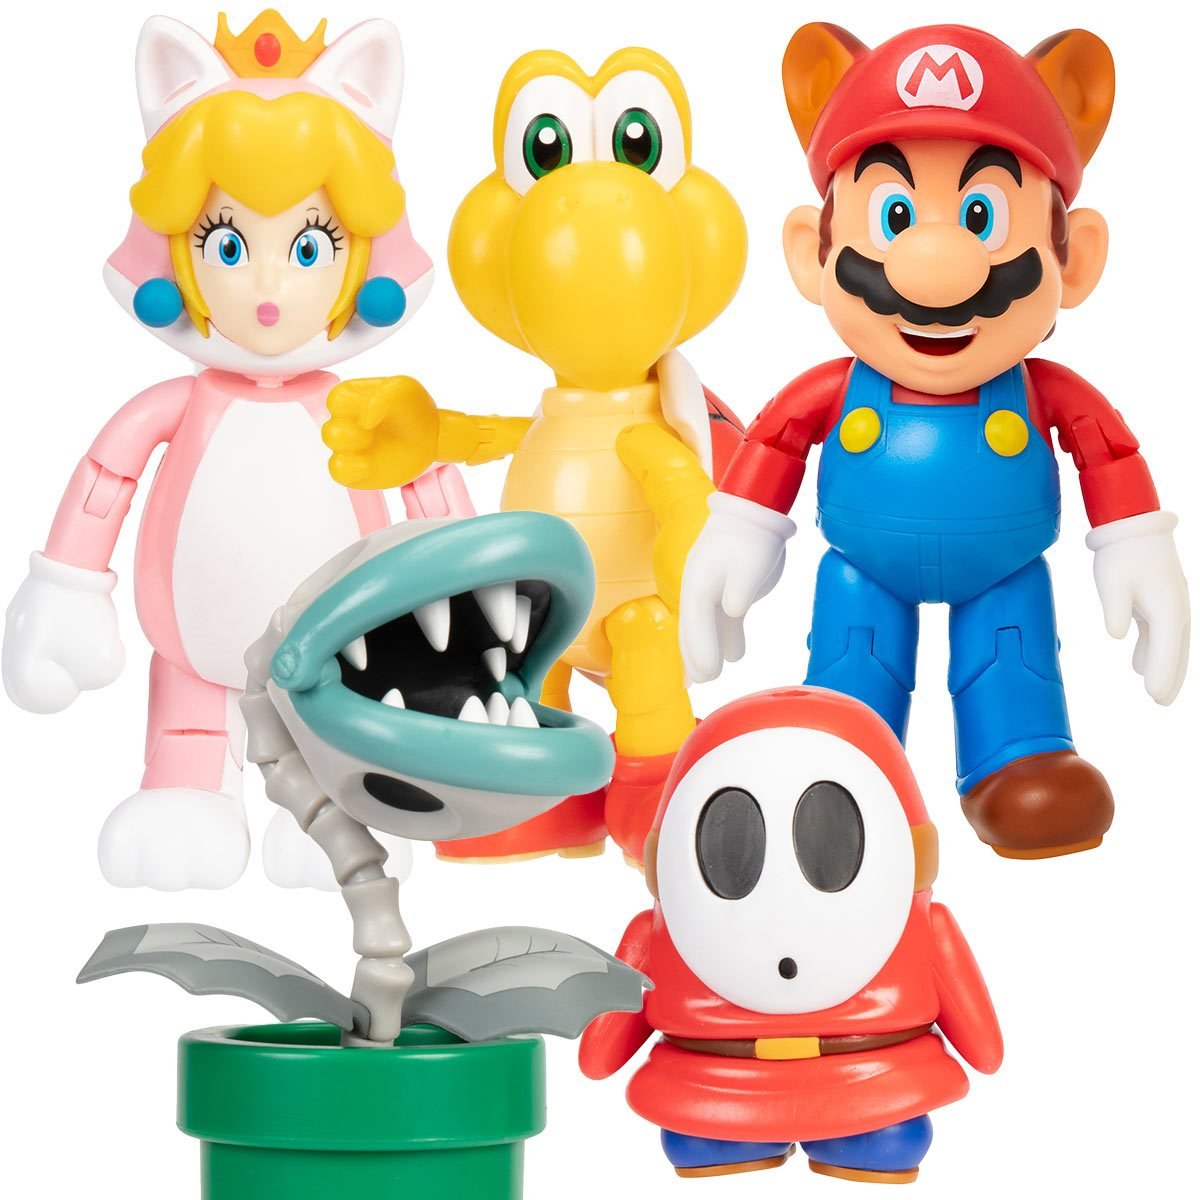 Jakks Pacific Super Mario Mario And Friends Multi Pack Action Figures